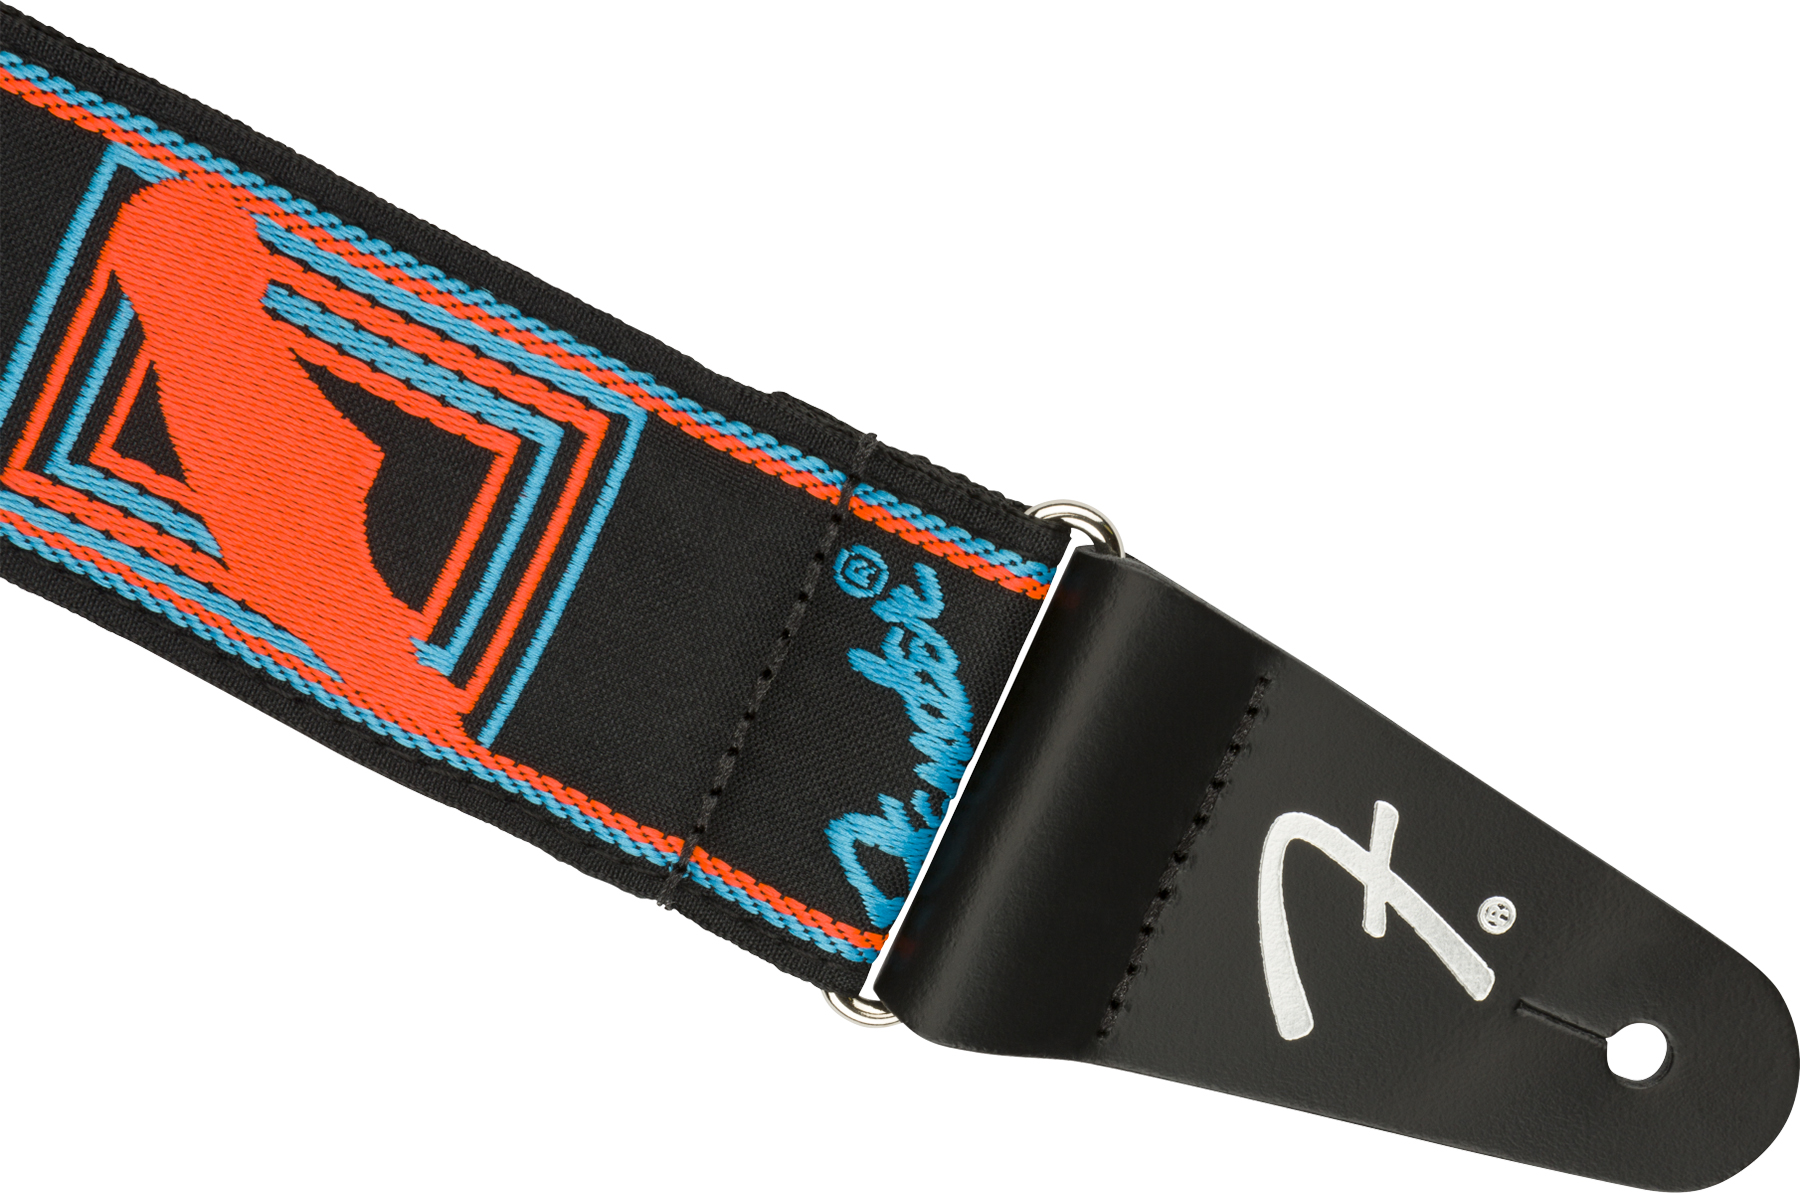 Fender Neon Monogrammed Guitar Strap - Blue/Orange Guitar strap